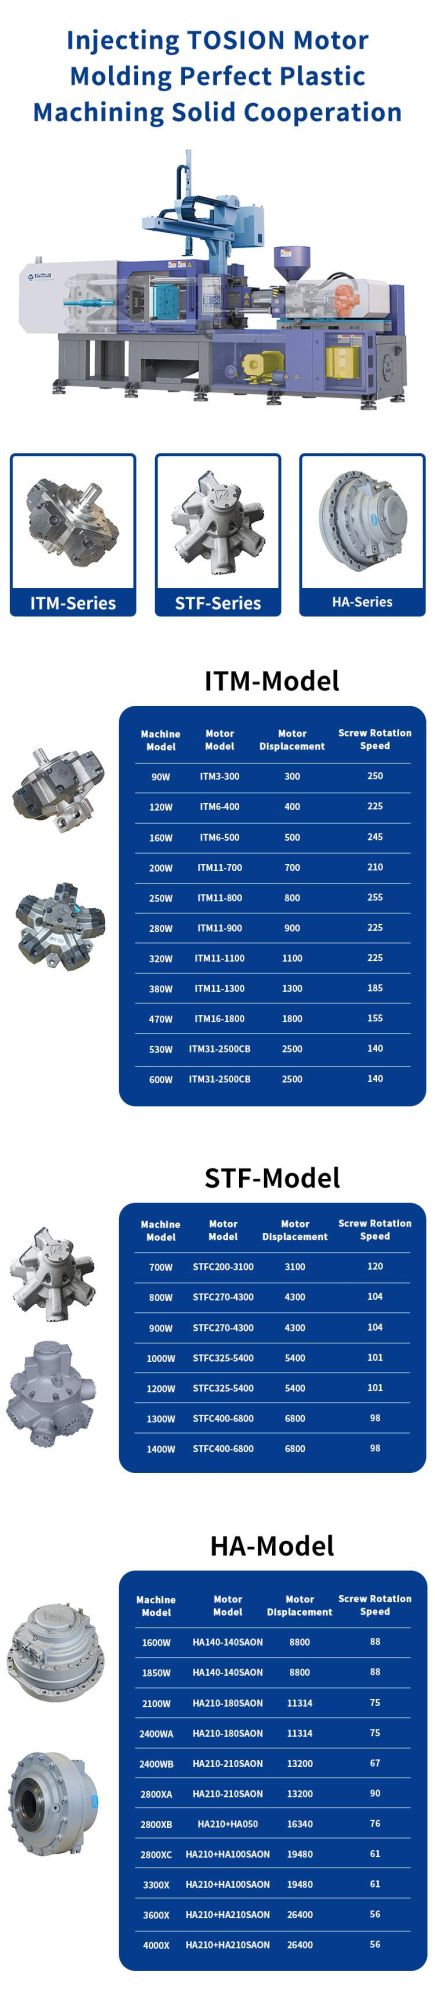 Tosion Brand Tam Intermot Hydraulic Hydromotor Inm3 Boat Motor Replace Zihyd Jmdg Iam Series H1 H2 H3 H4 H5 H6 H7 H8